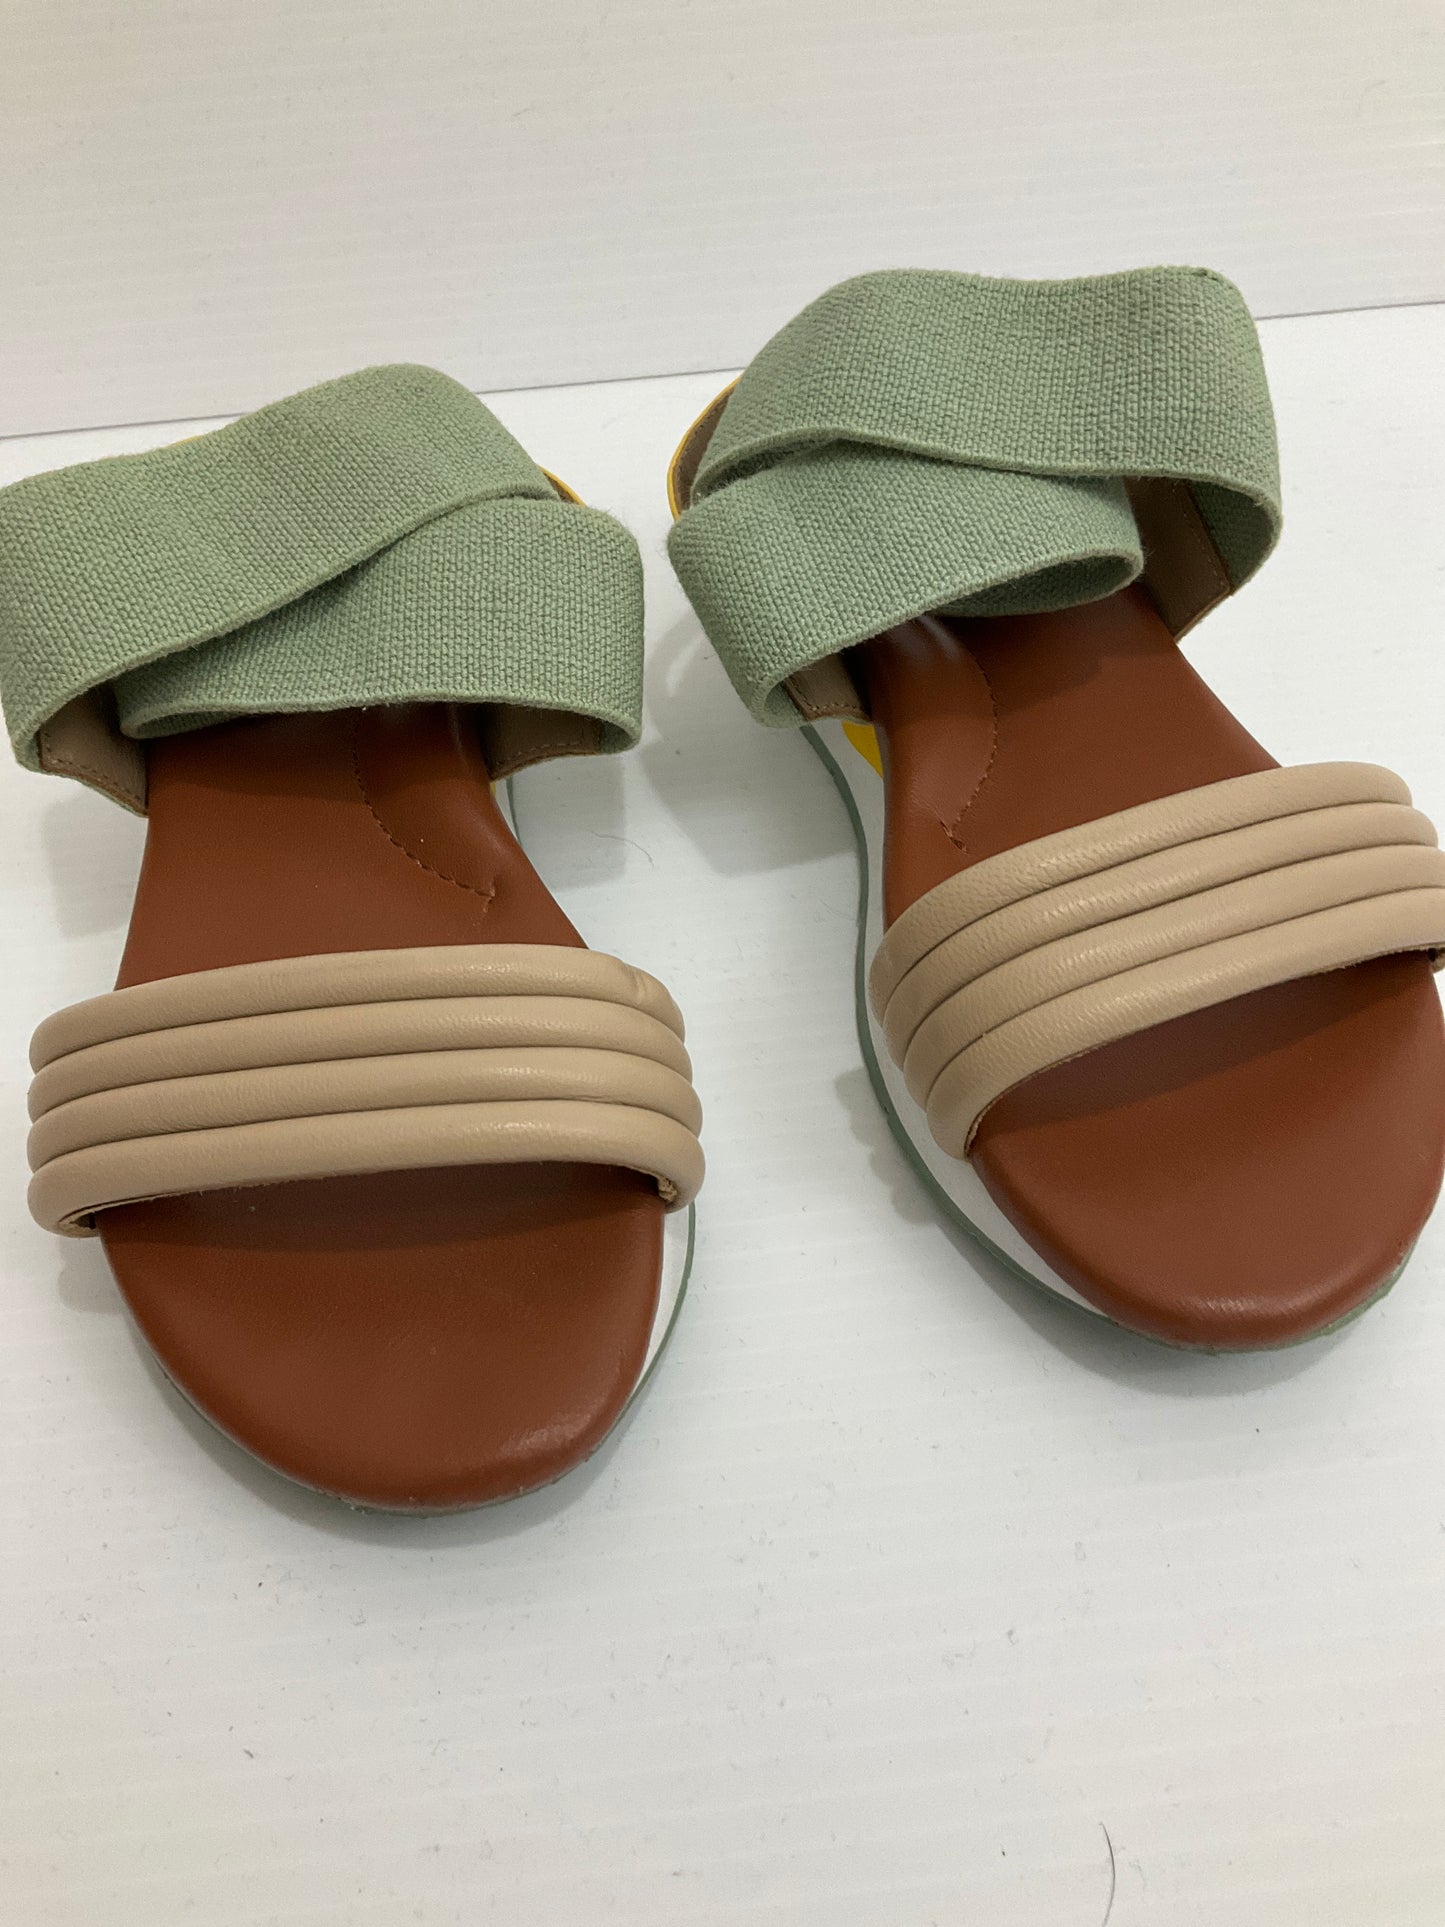 Sandals Flats By Donald Pliner  Size: 6